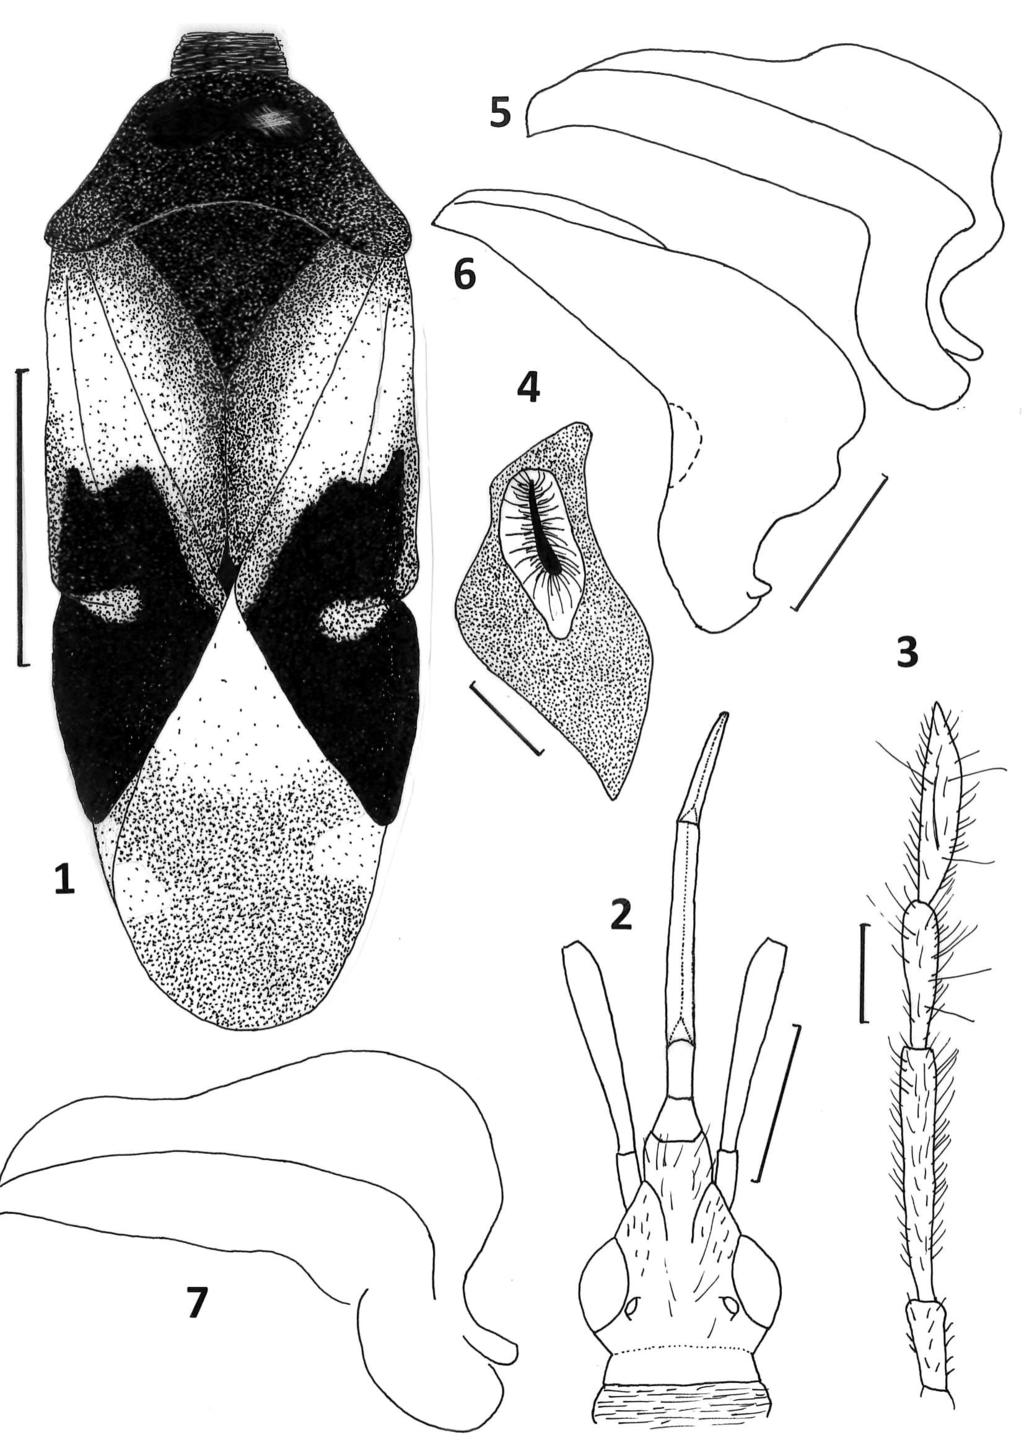 Acta Entomologica Musei Nationalis Pragae, 57(2), 2017 475 Figs 1 7. Anthocoris kmenti sp. nov.